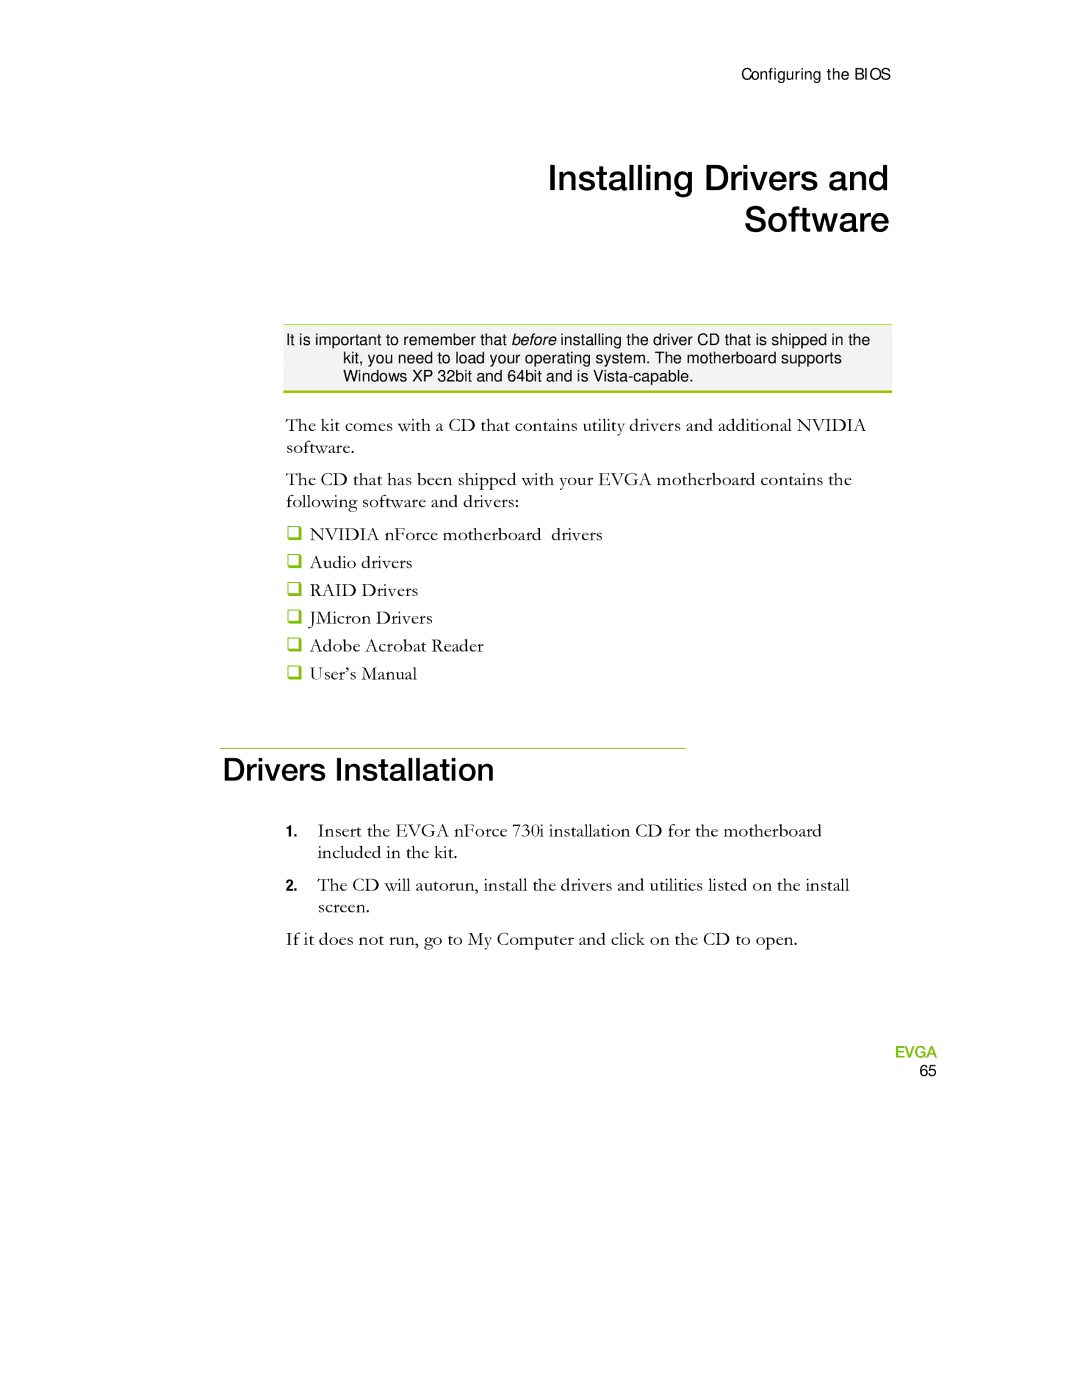 EVGA 730I manual Installing Drivers Software, Drivers Installation 